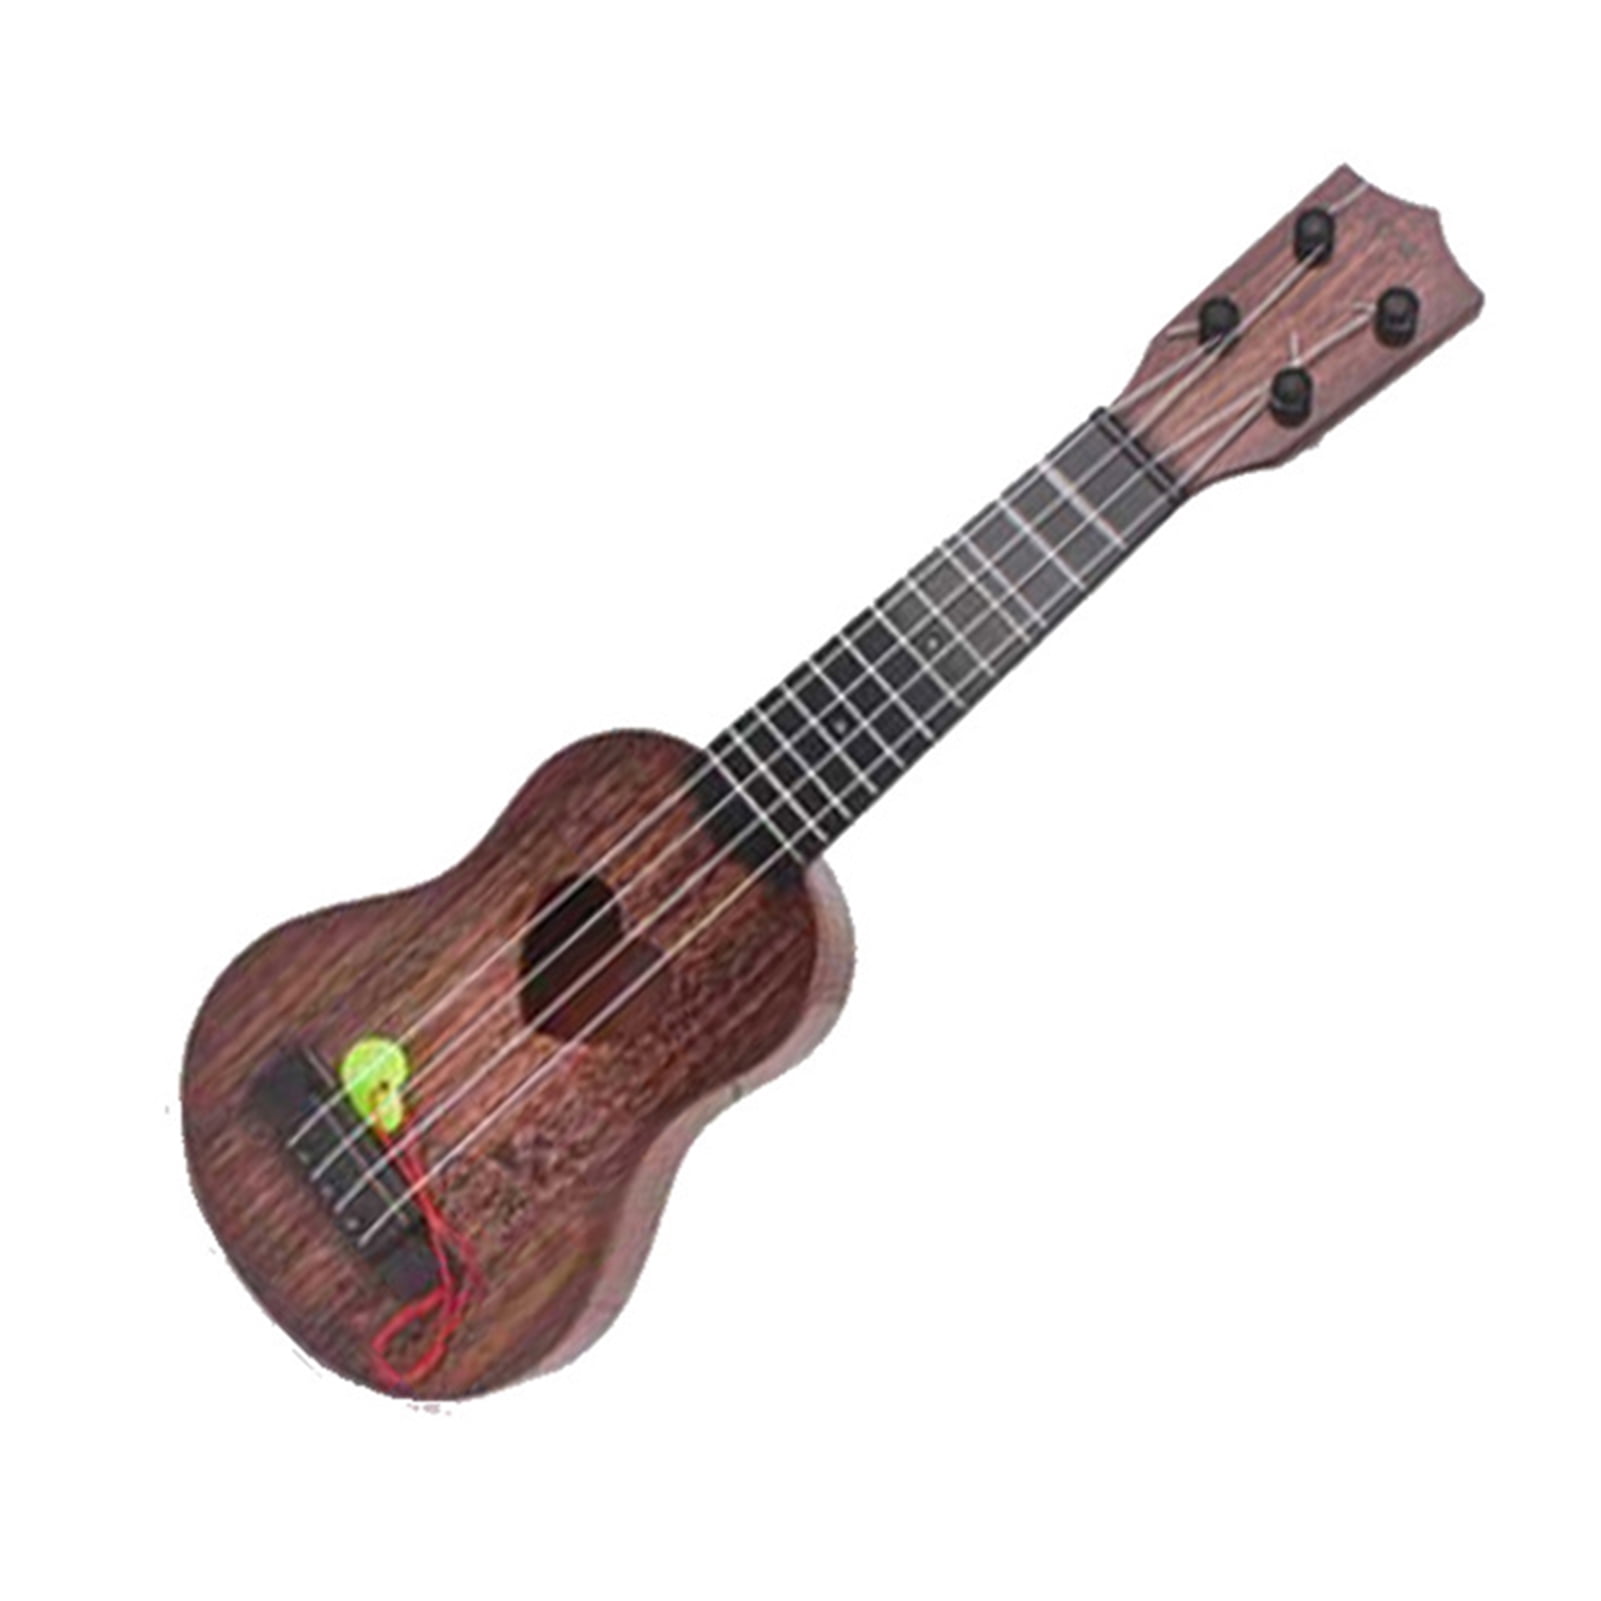 Details about   Kids Ukulele Guitar Toy Simulation 4 Strings Children Musical Instruments